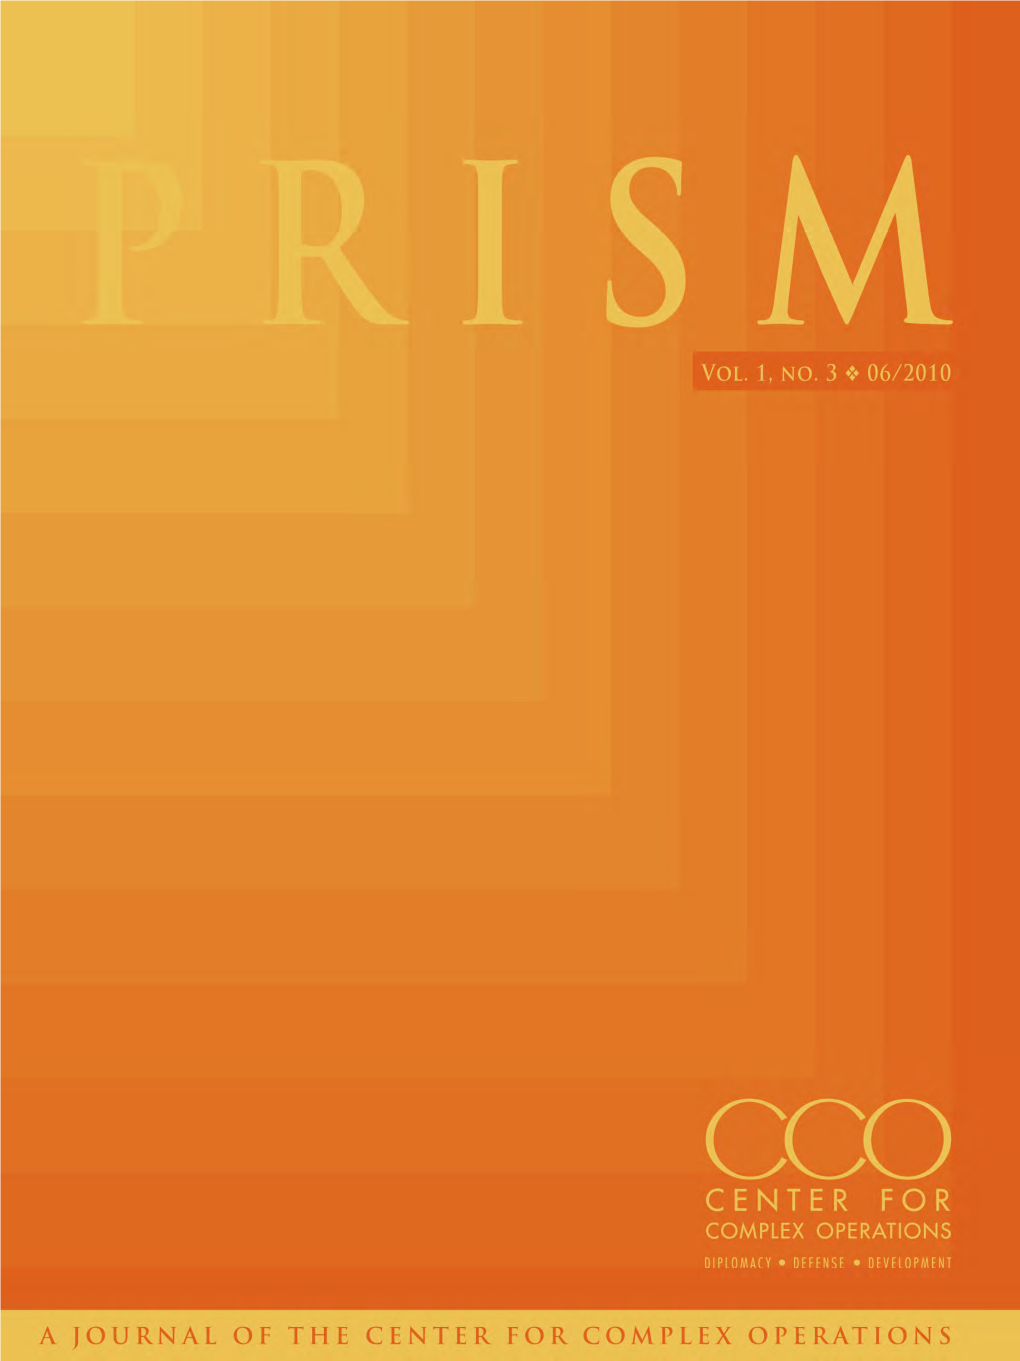 PRISM Vol 1 Issue 3.Pdf